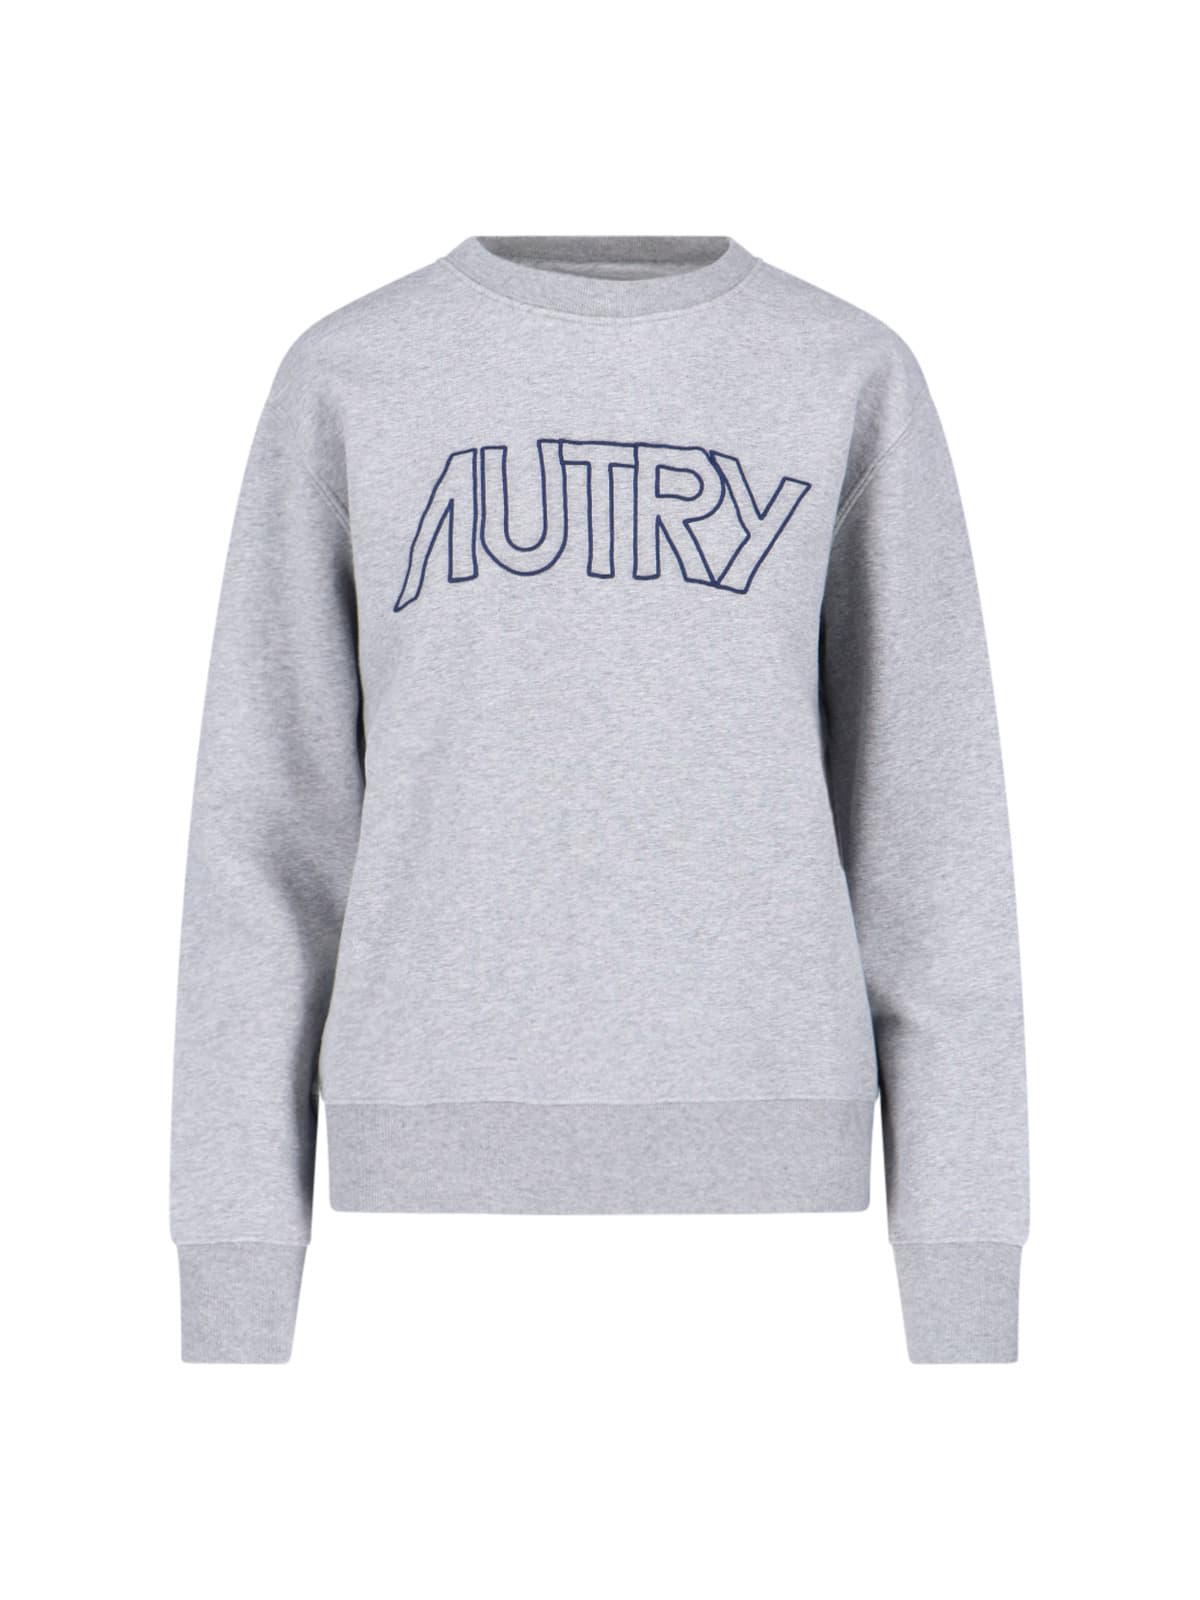 Autry Logo Embroidery Bib Sweatshirt In Gray